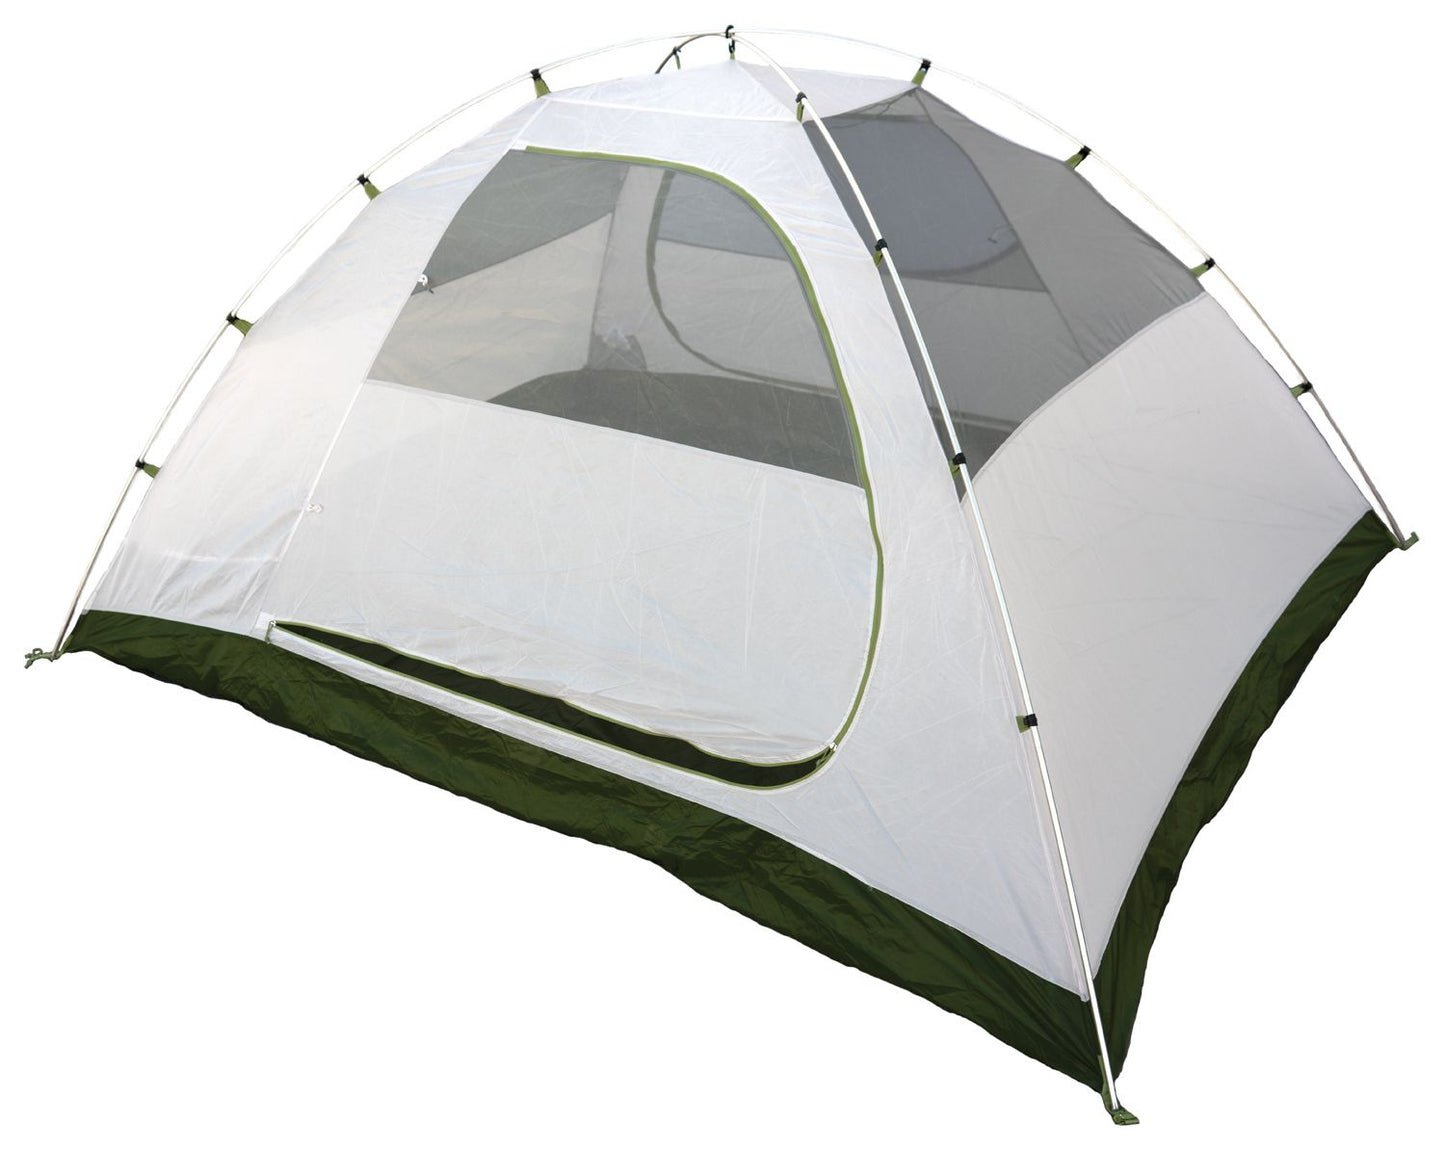 Peregrine Equipment Gannet 3-Person Tent / Footprint Combo 580559